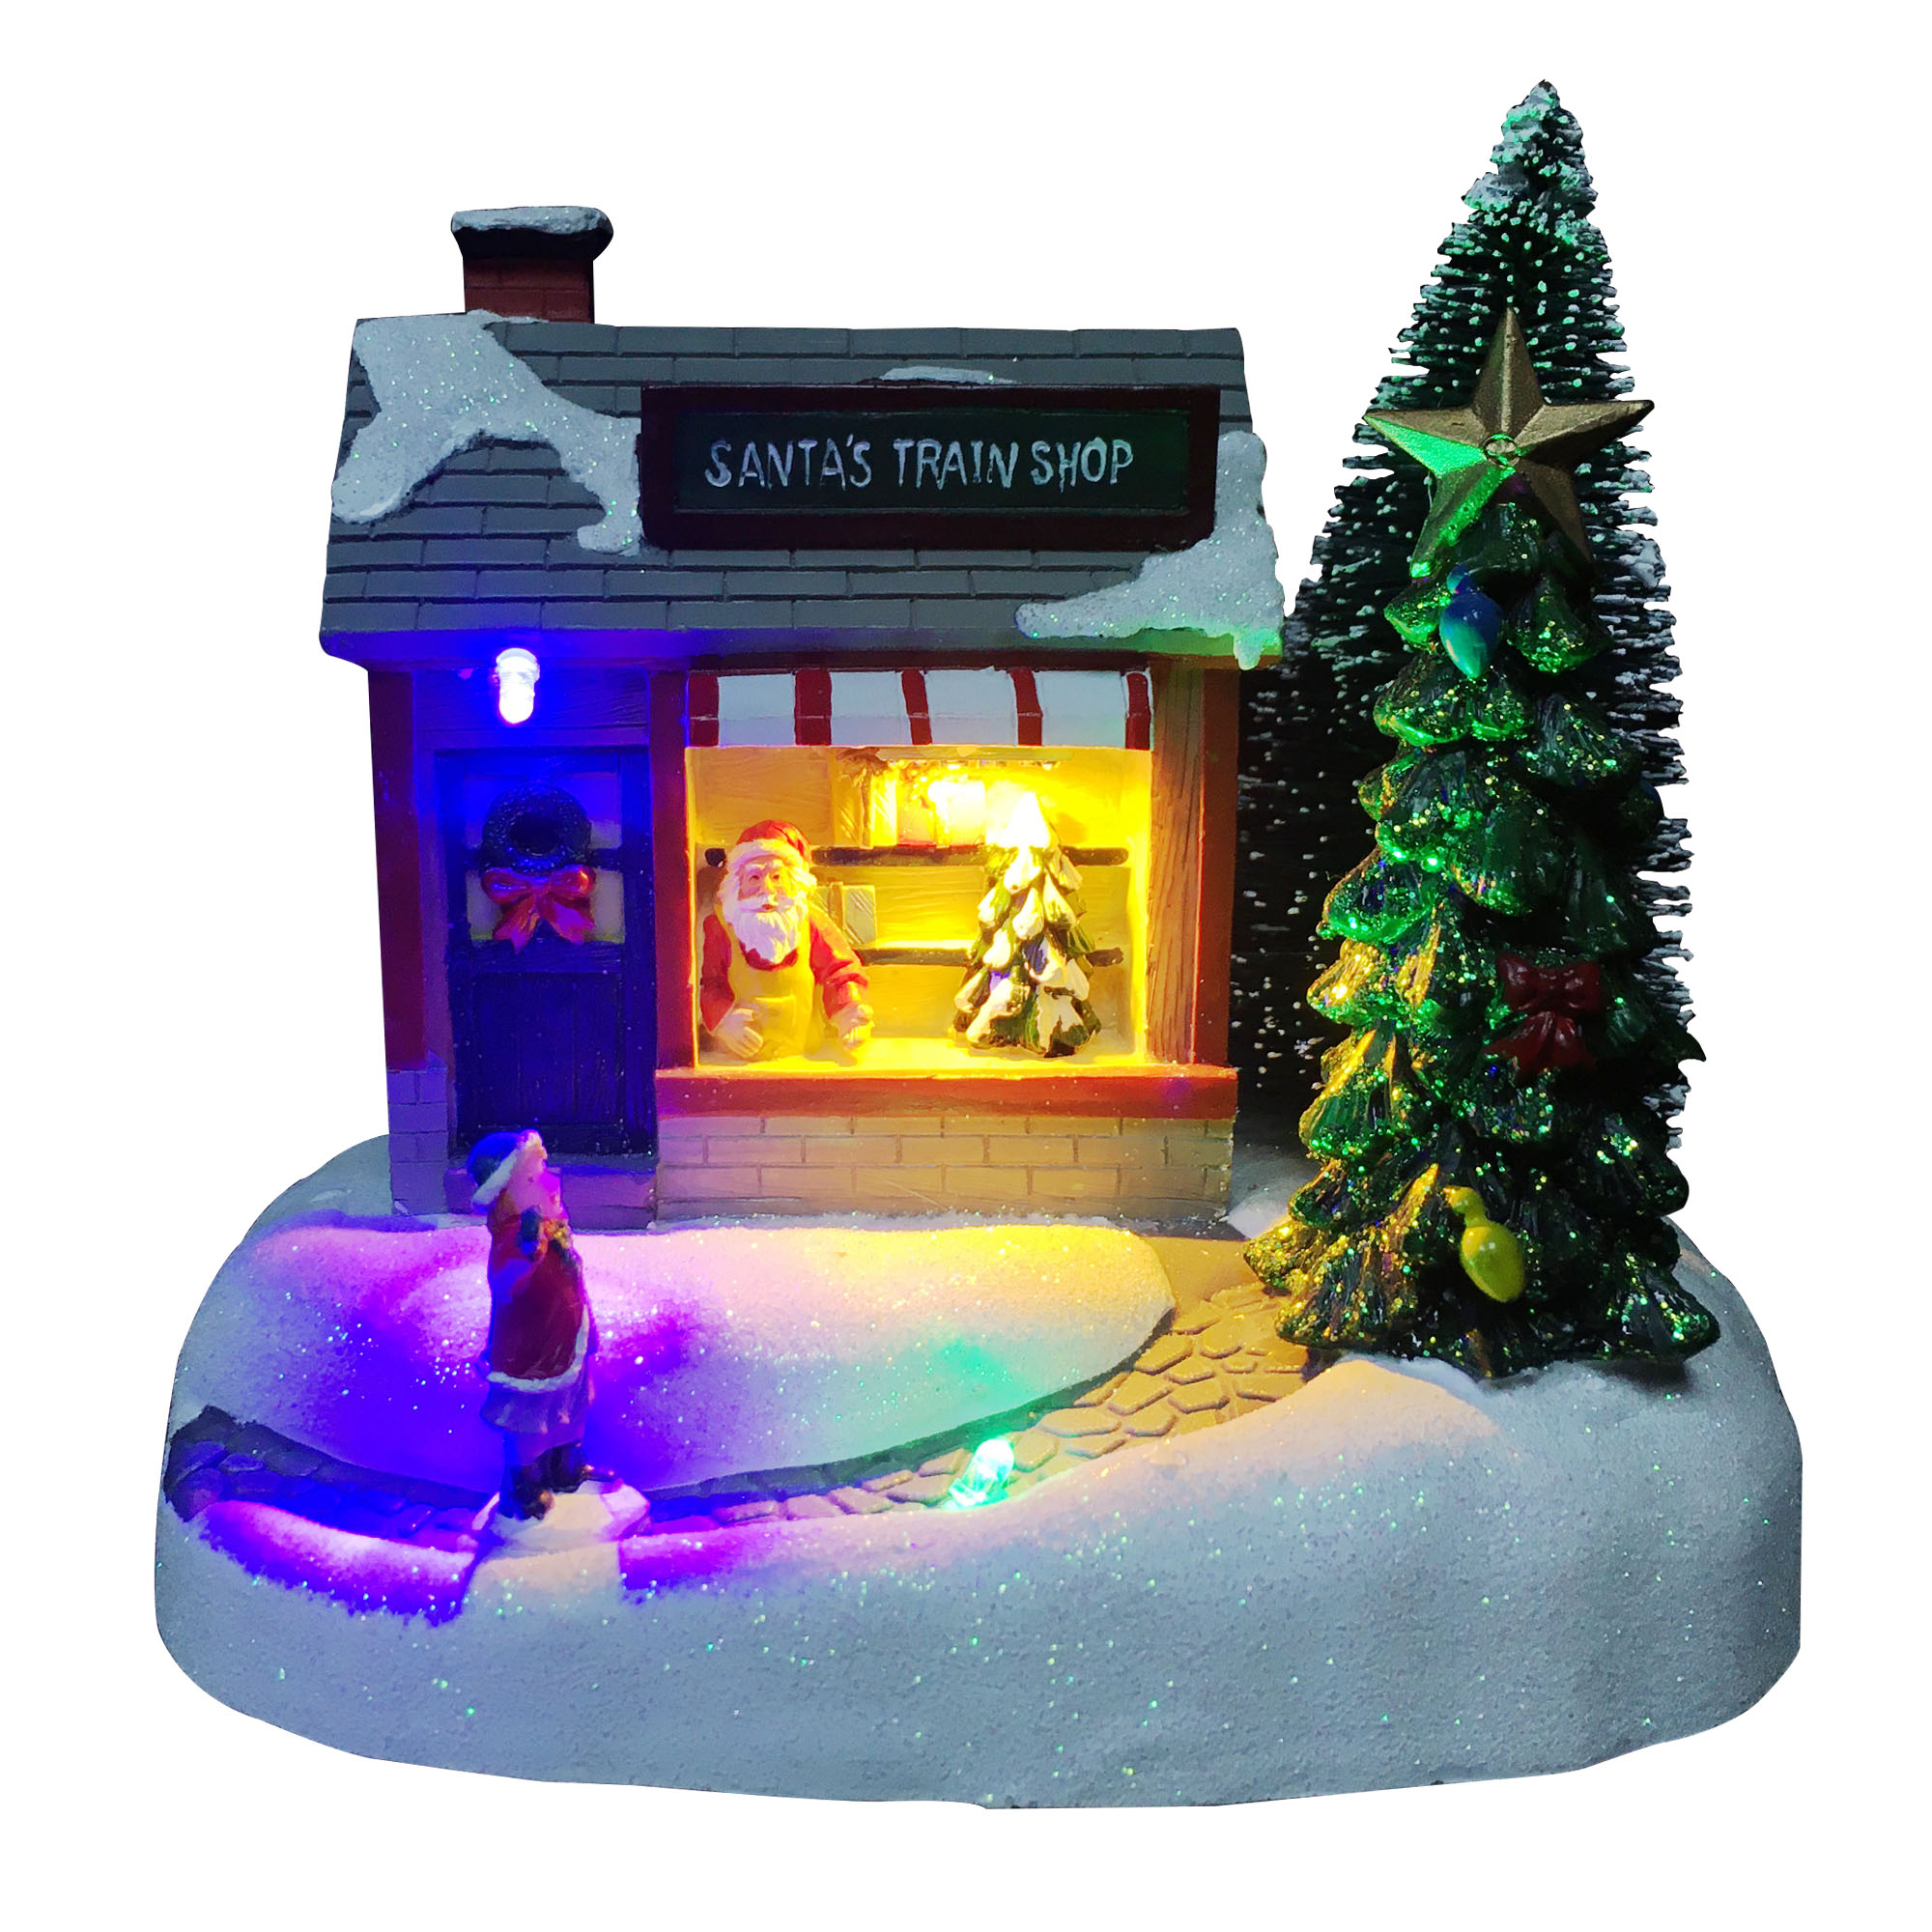 Hot-selling Large Christmas Village Sets - Melody colorful Xmas village Christmas Decoration Santa’s Train Shop scene led lighted Christmas house – Melody